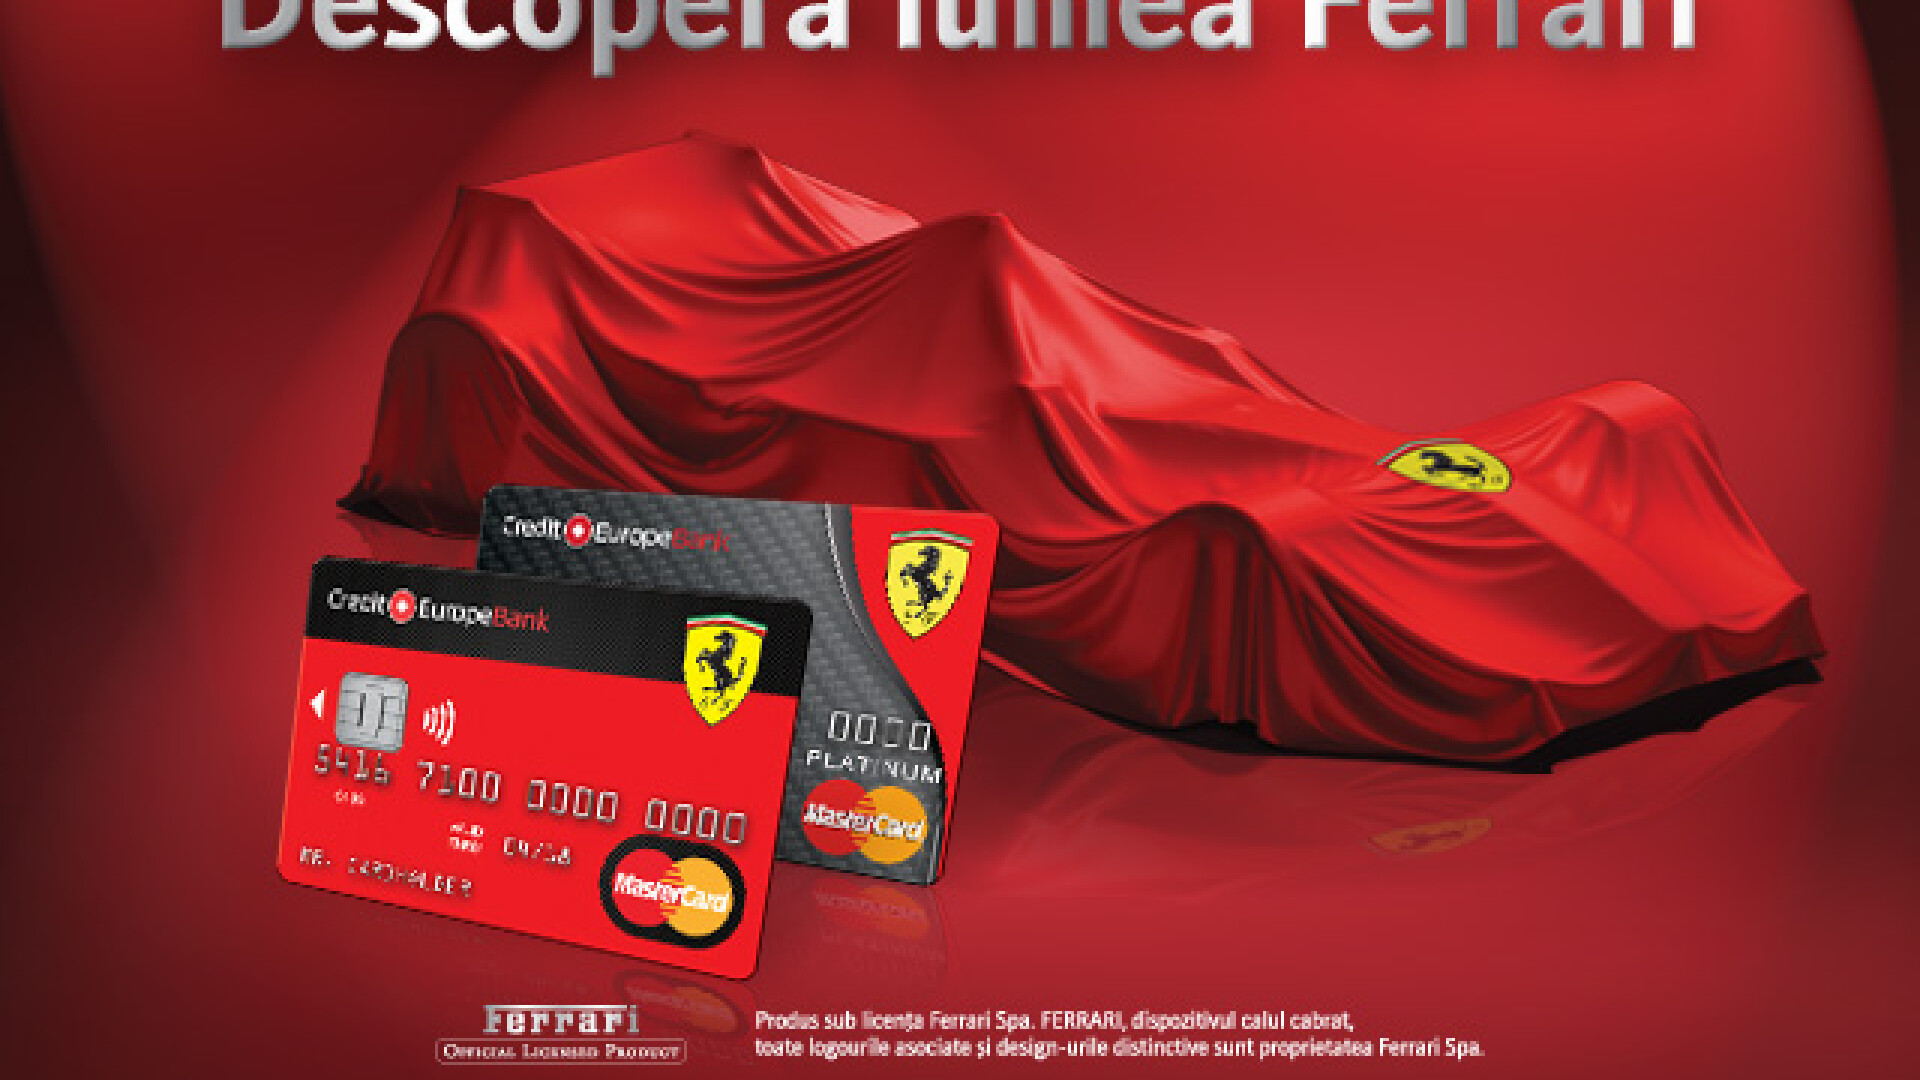 Ferrari Card